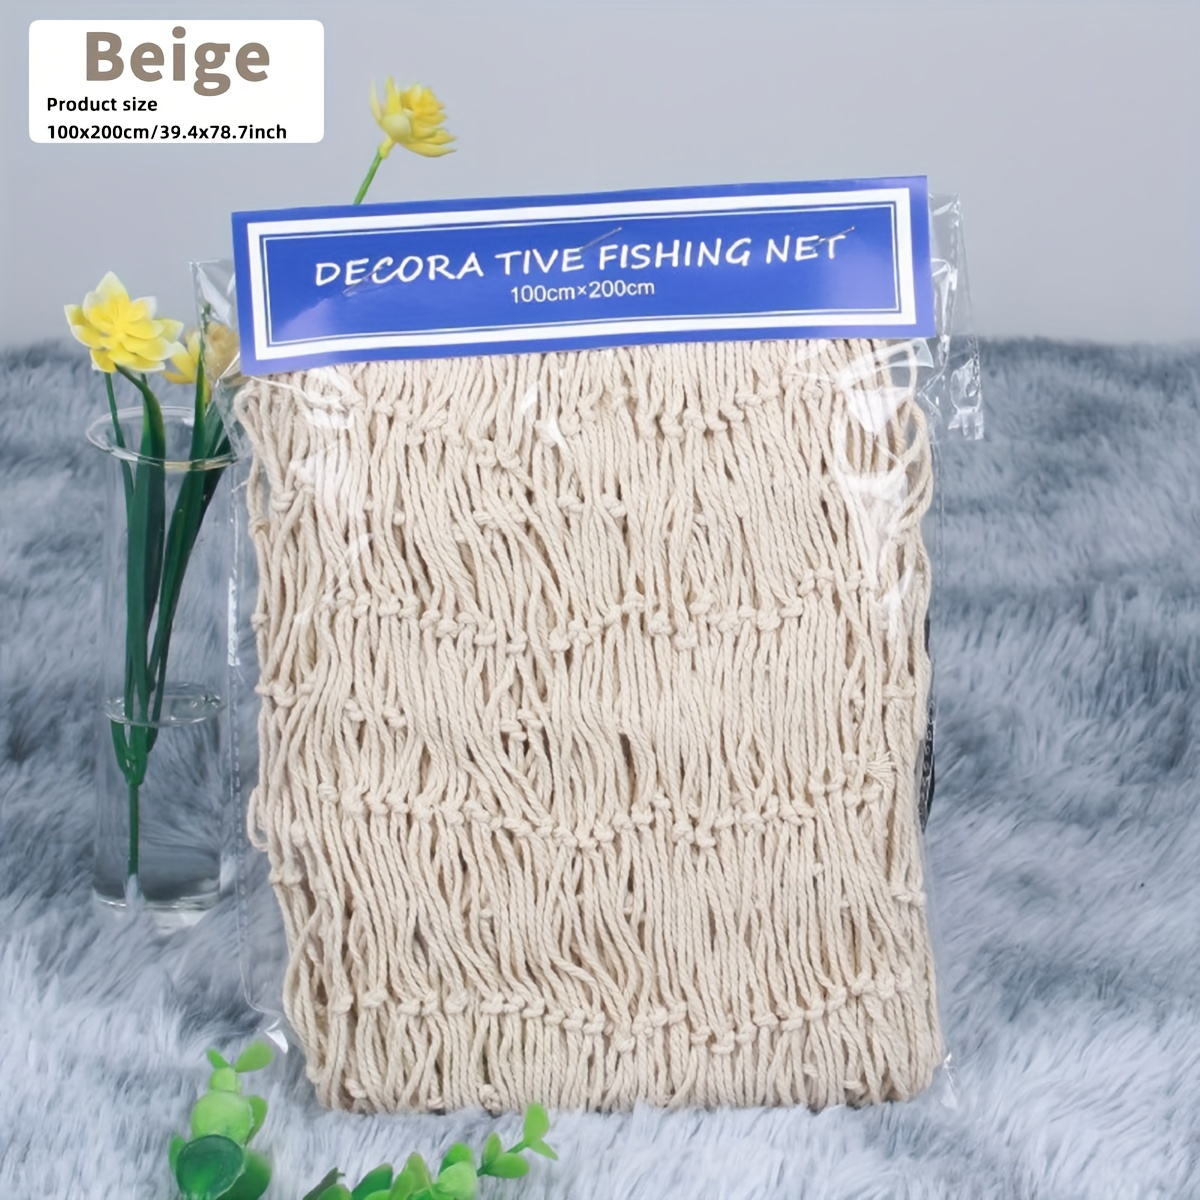  Bilipala Decorative Fish Netting, Fishing Net Decor